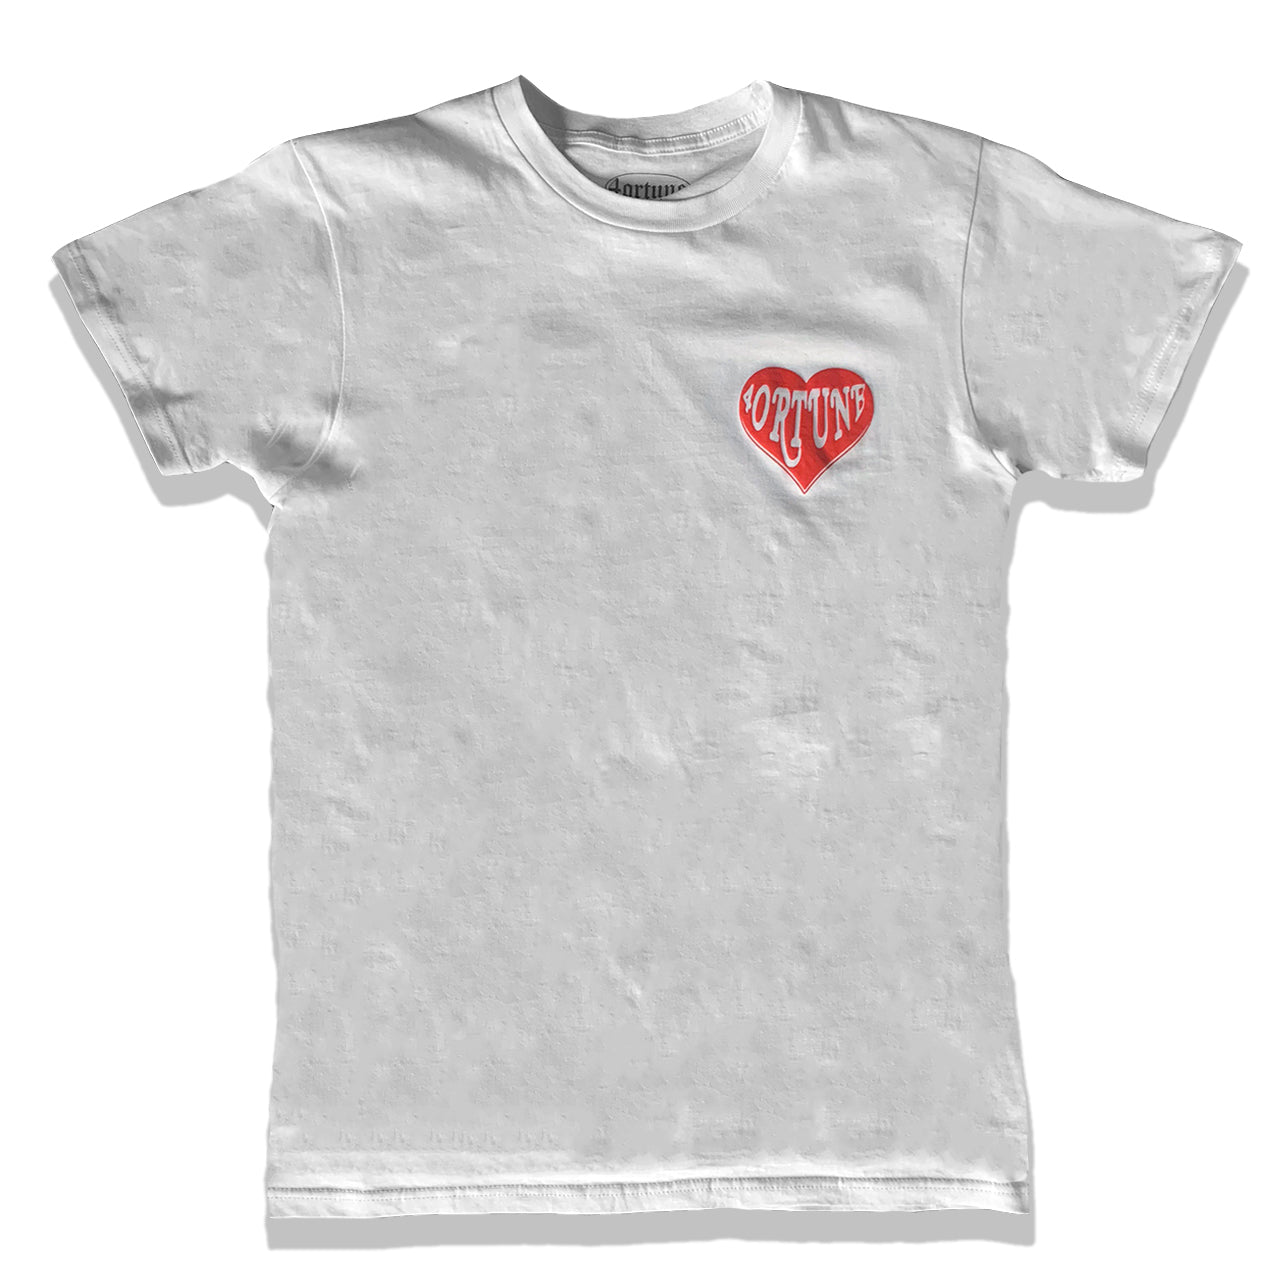 4ortune Valentines T-Shirt